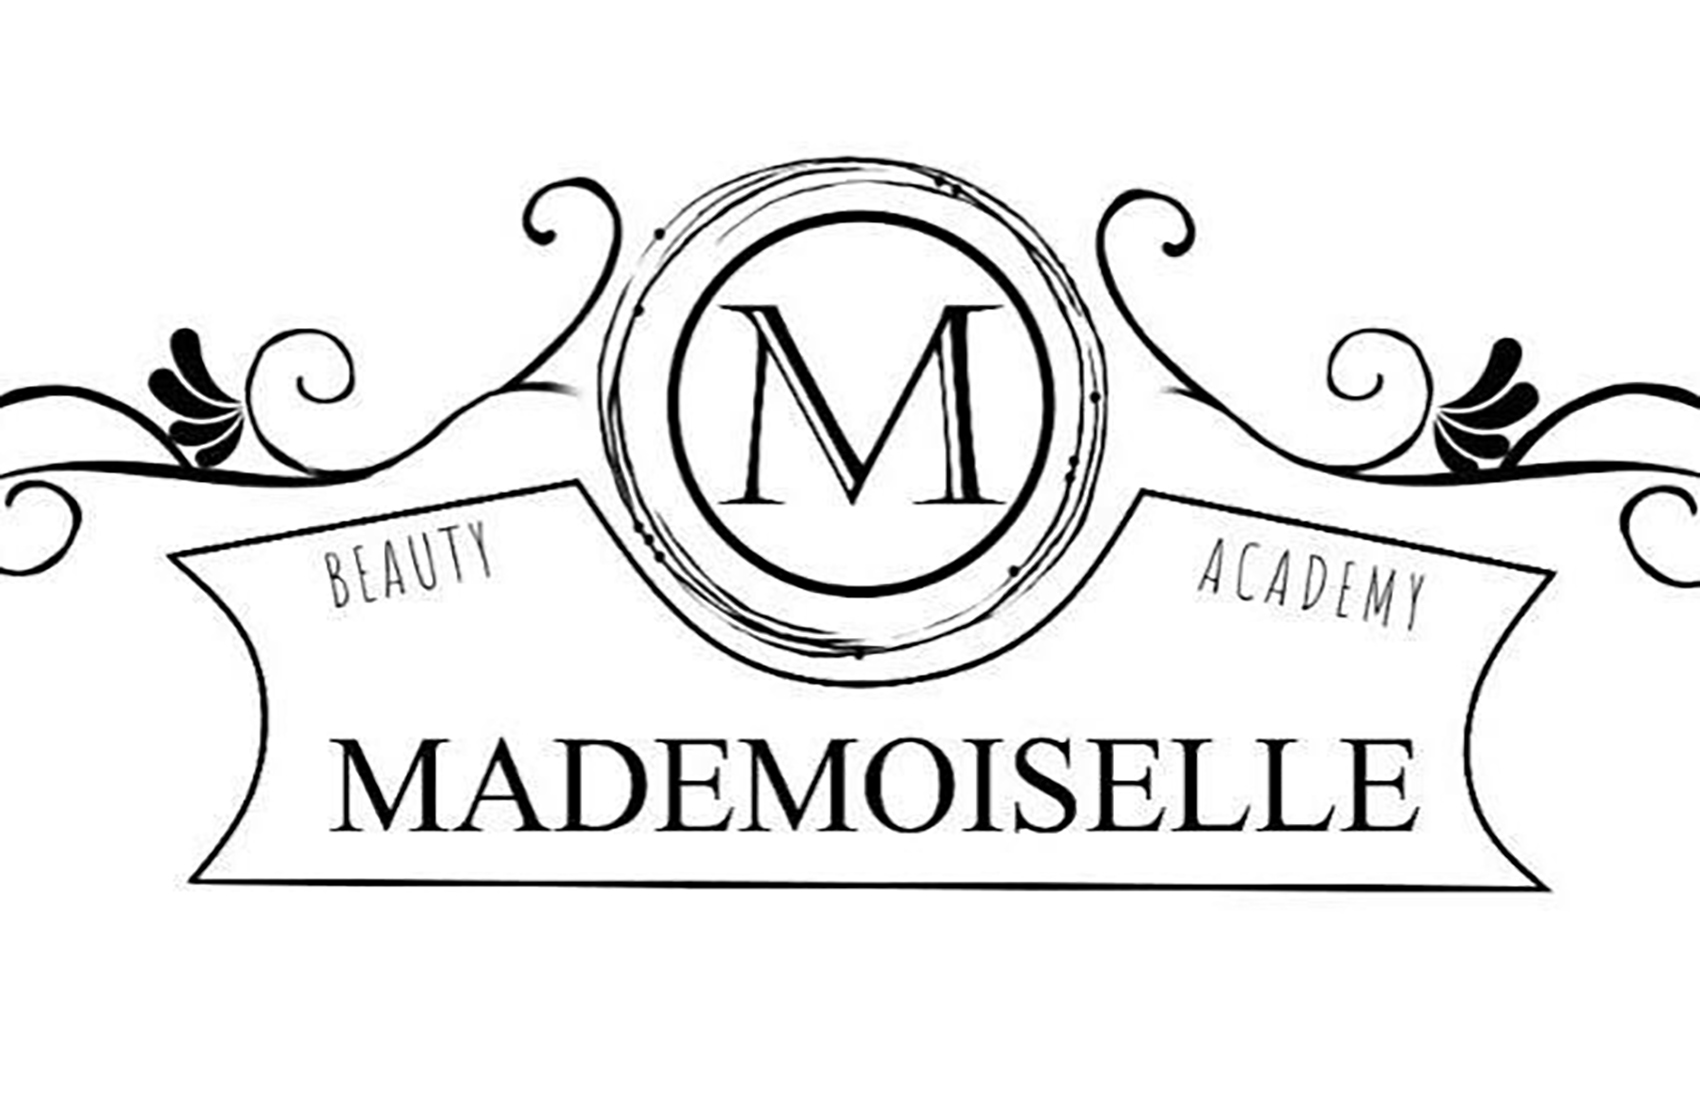 Beauty Academy Mademoiselle Cividale del Friuli - Cividale del Friuli